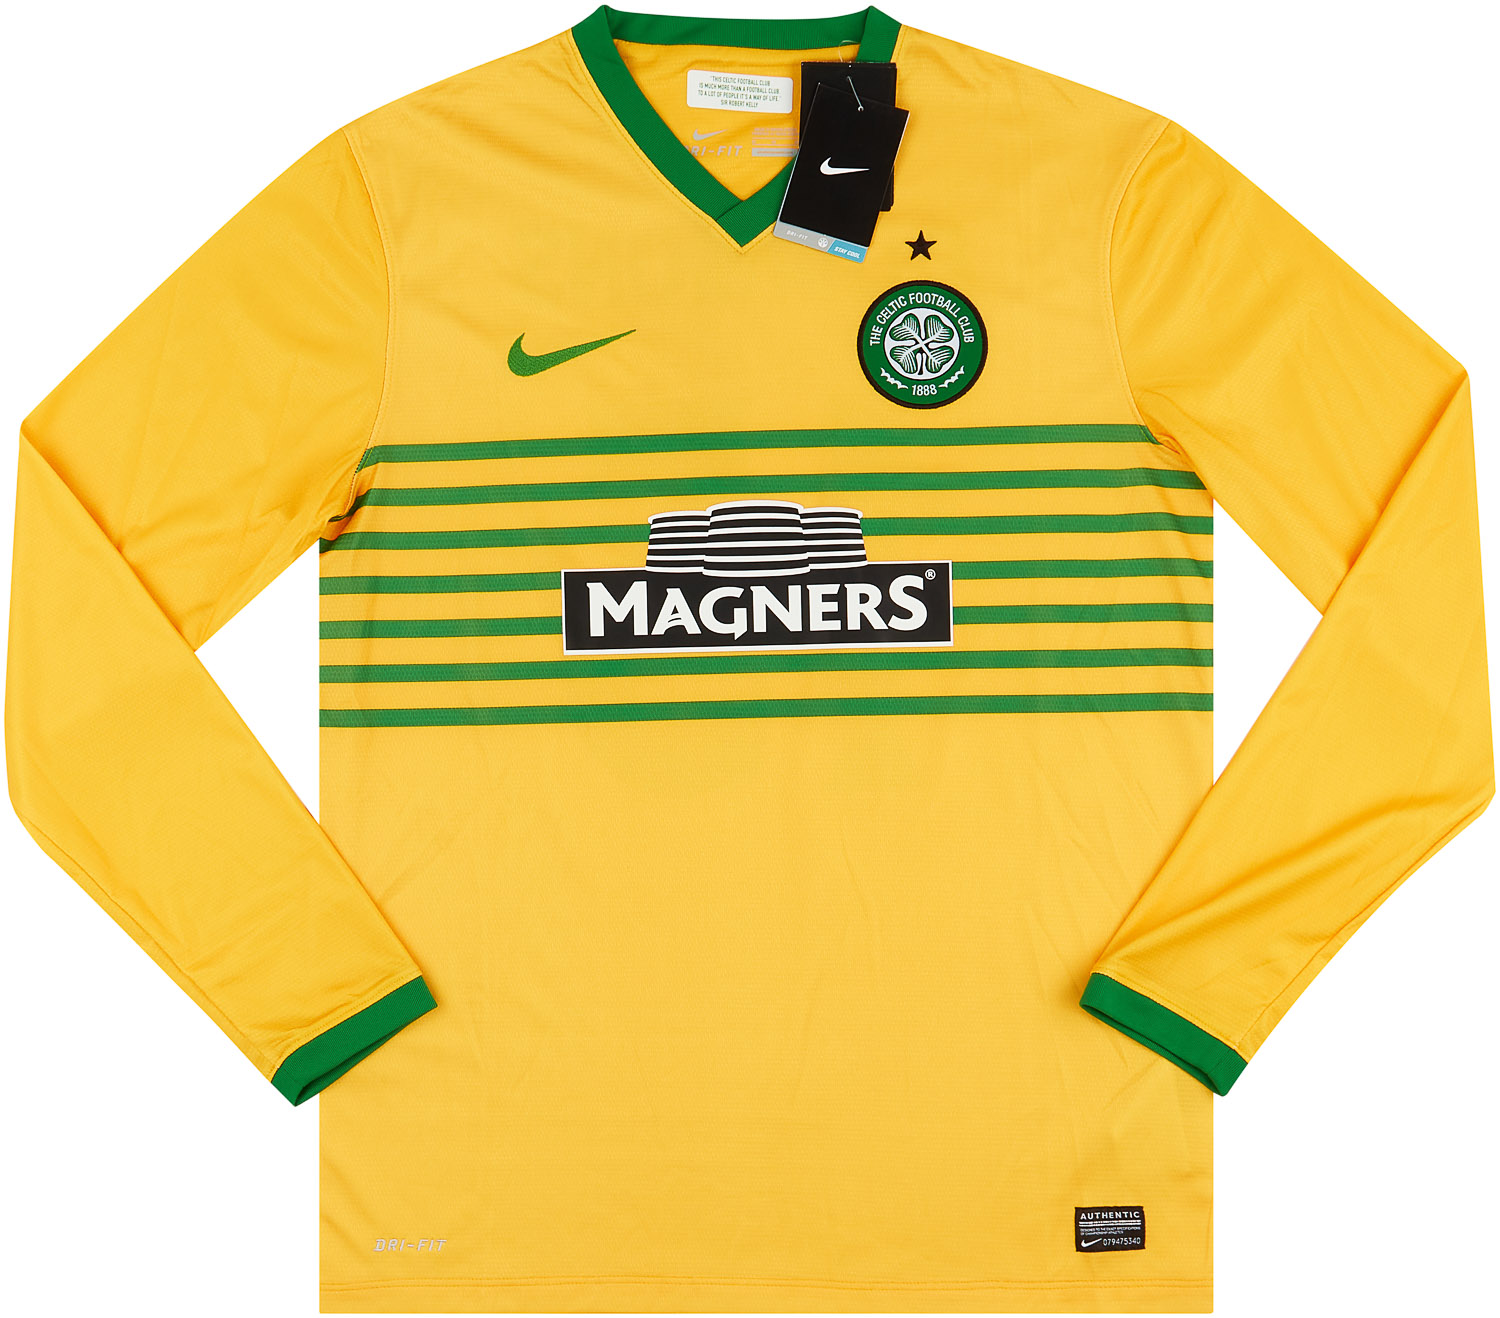 2013/14 Celtic Home Football Shirt / Original Old Soccer Jersey